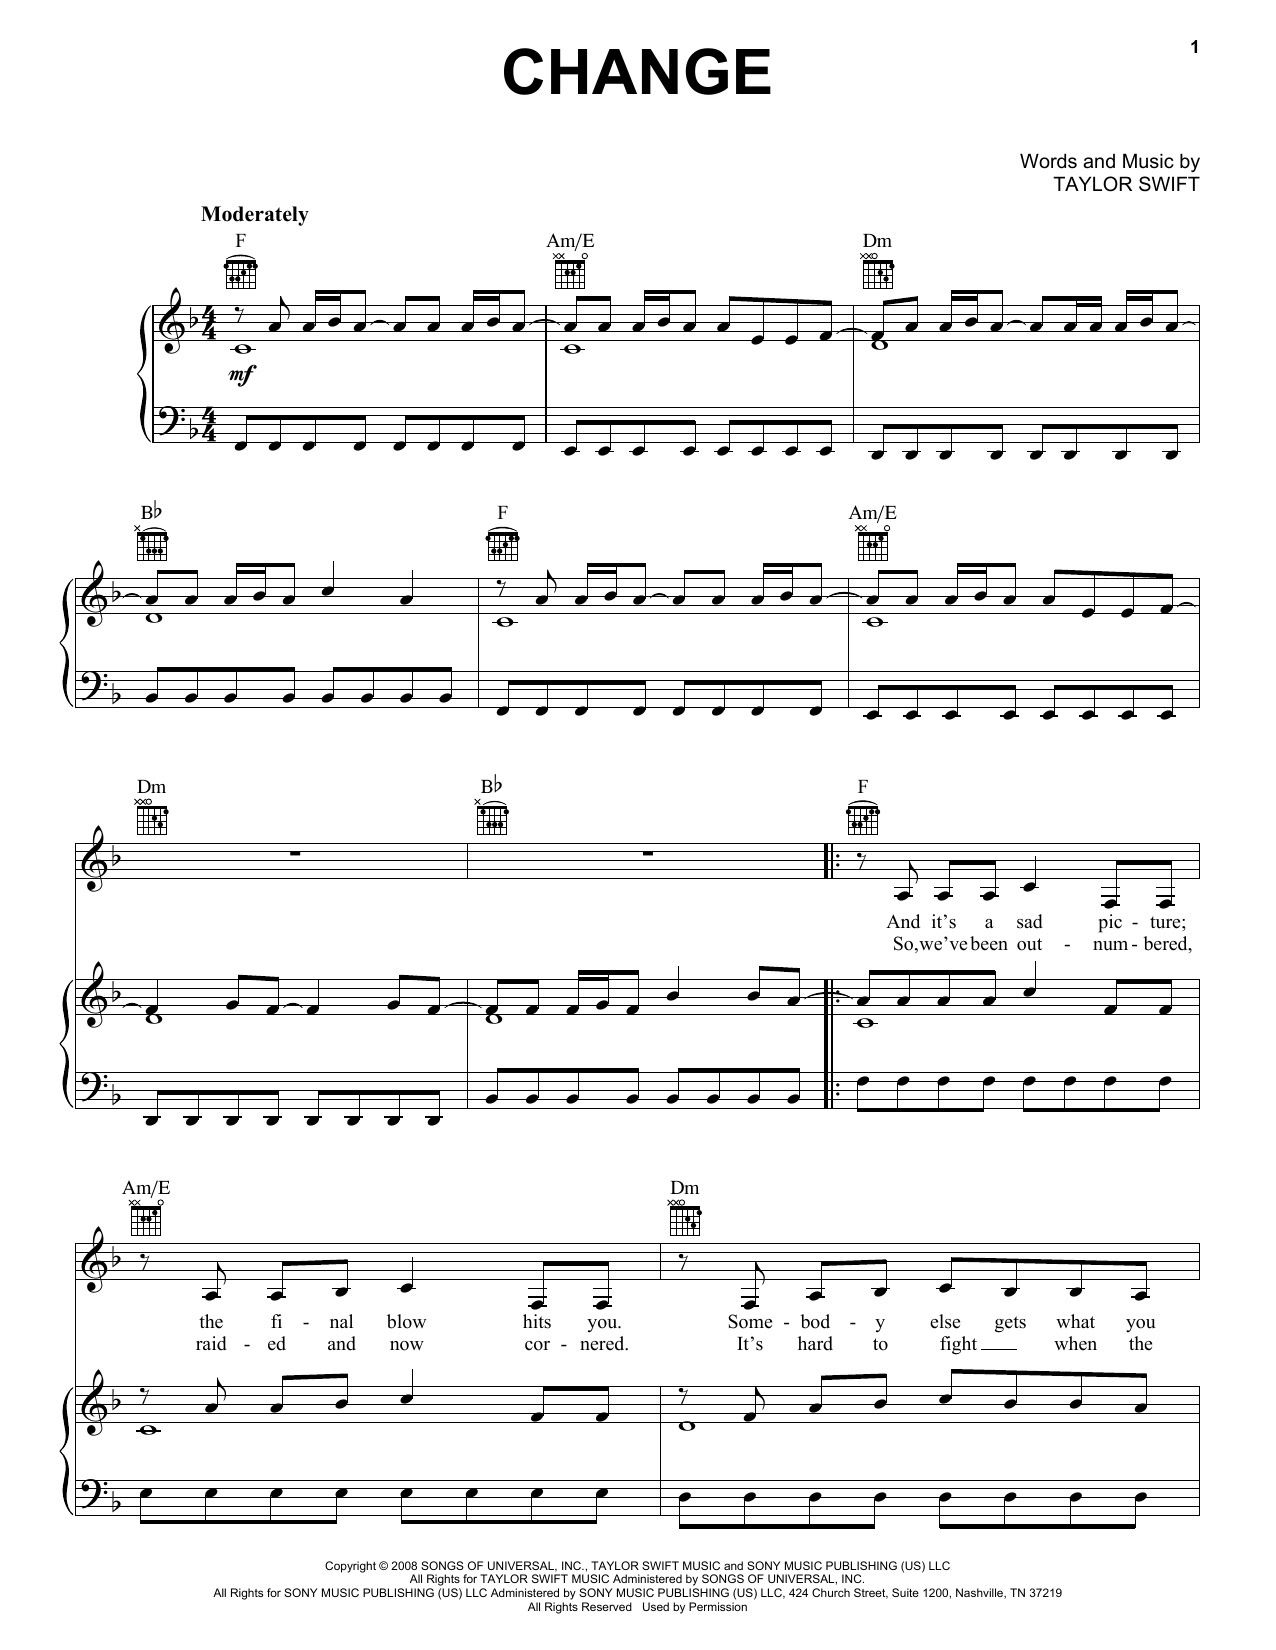 Taylor Swift Change sheet music notes and chords arranged for Ukulele